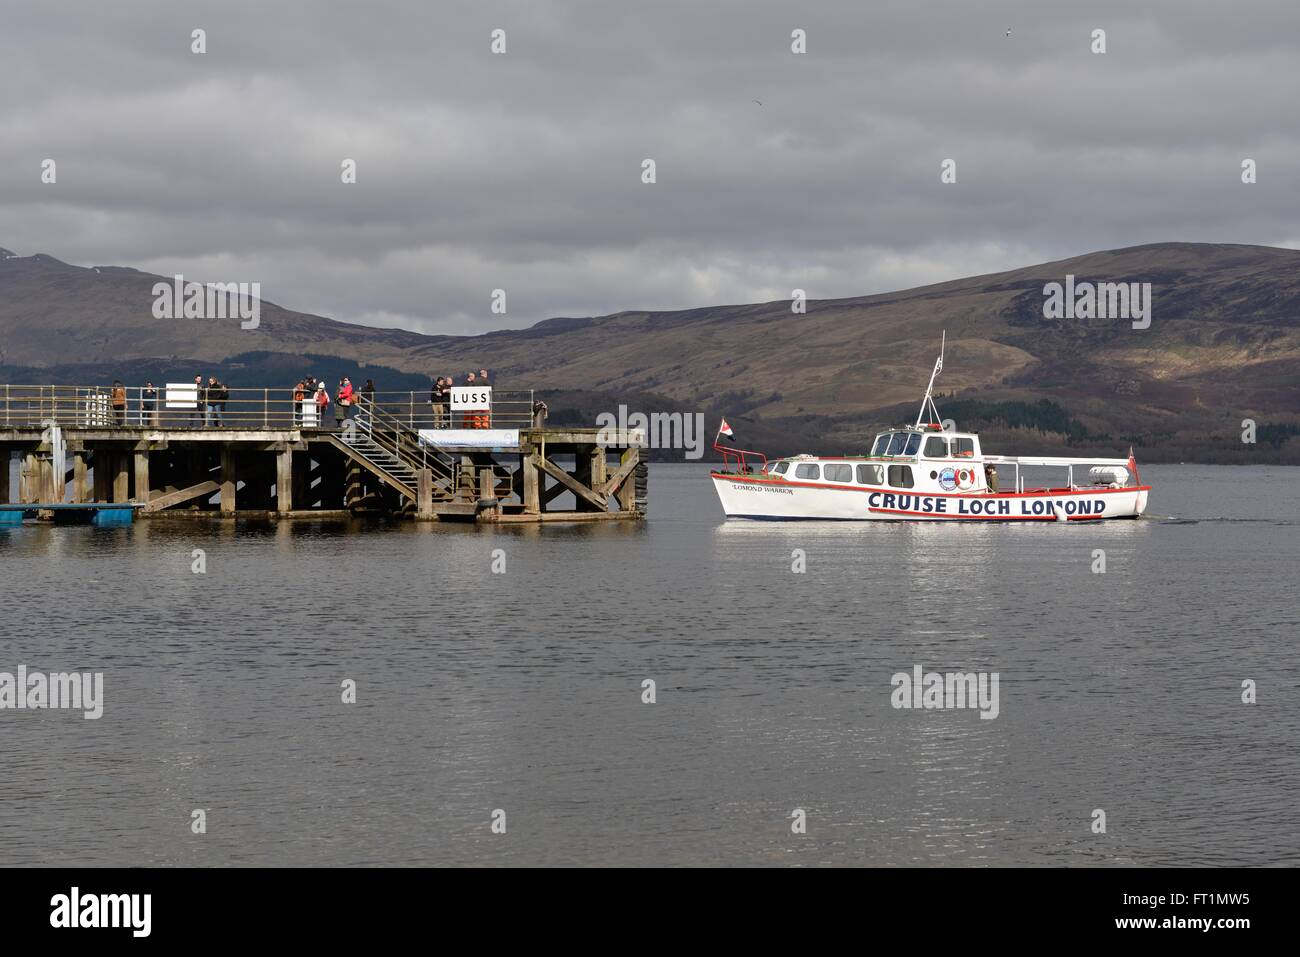 A small cruise boat approaching Luss pier on Loch Lomond, Argyll & Bute, Scotland, UK Stock Photo